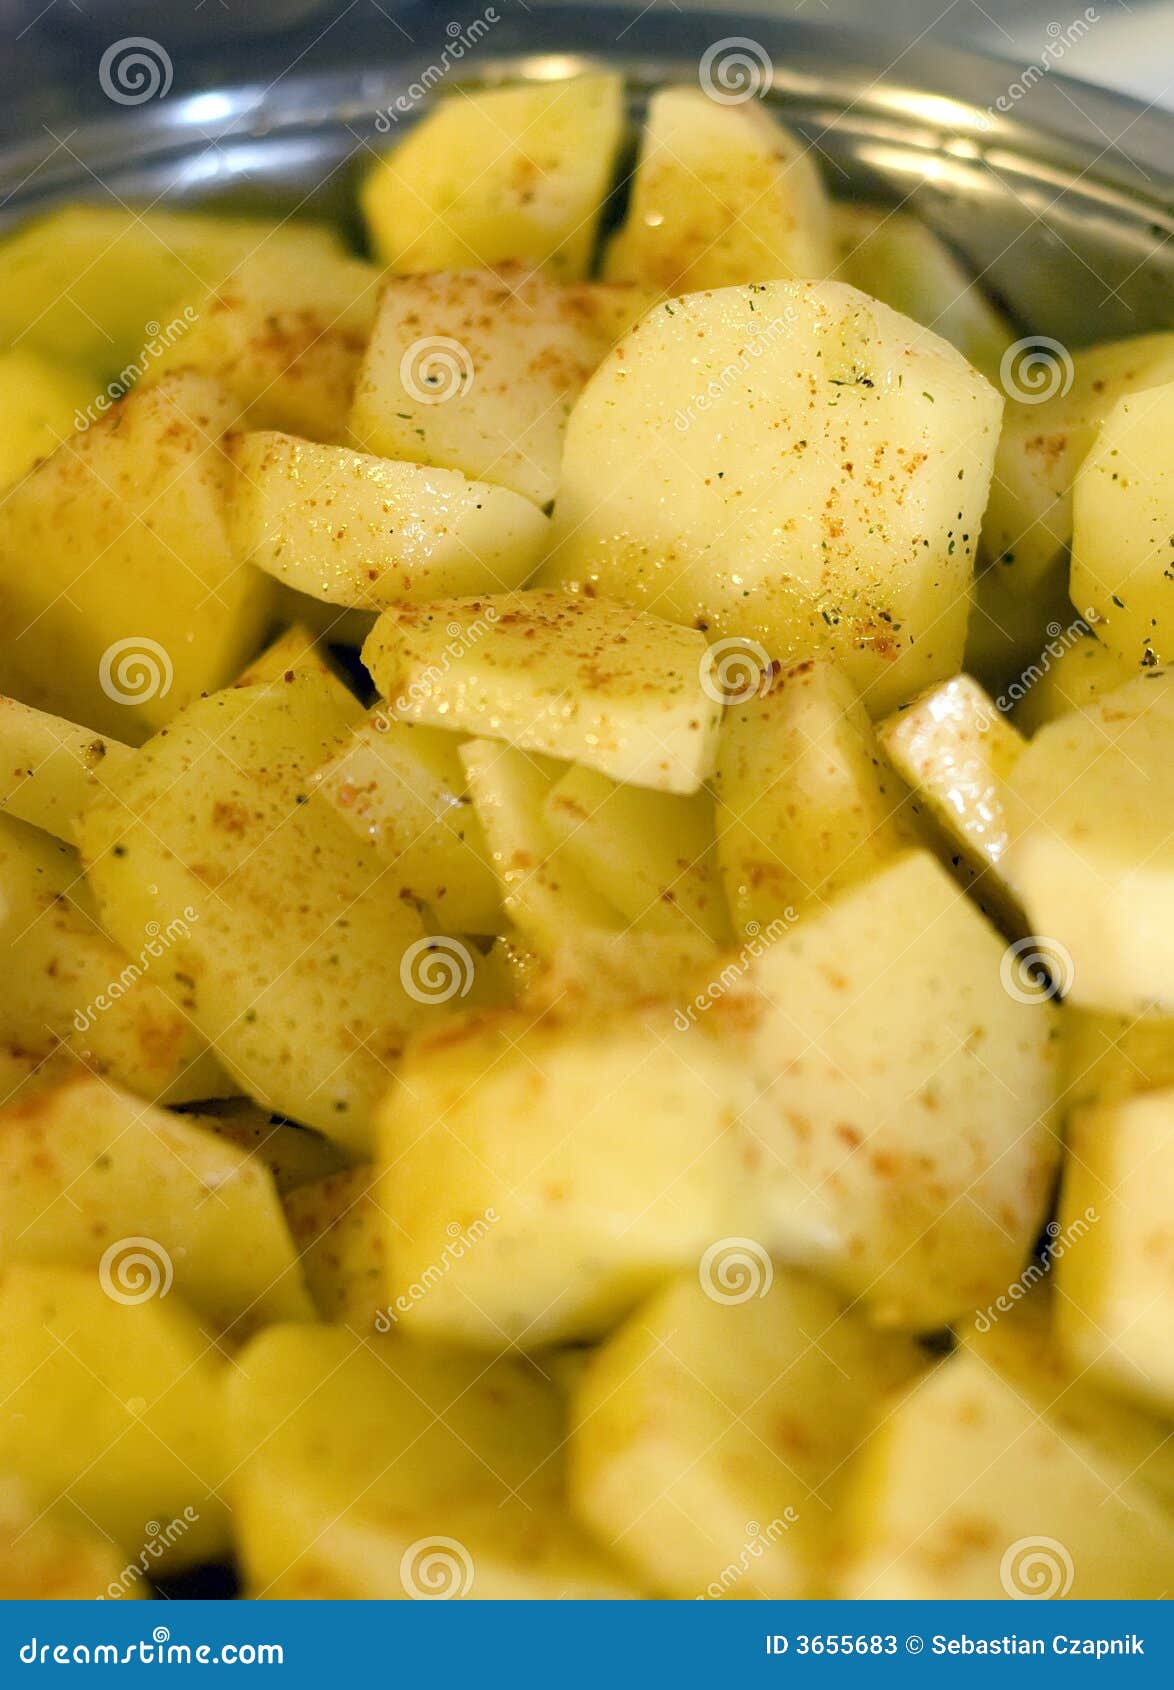 potatoes and paprika